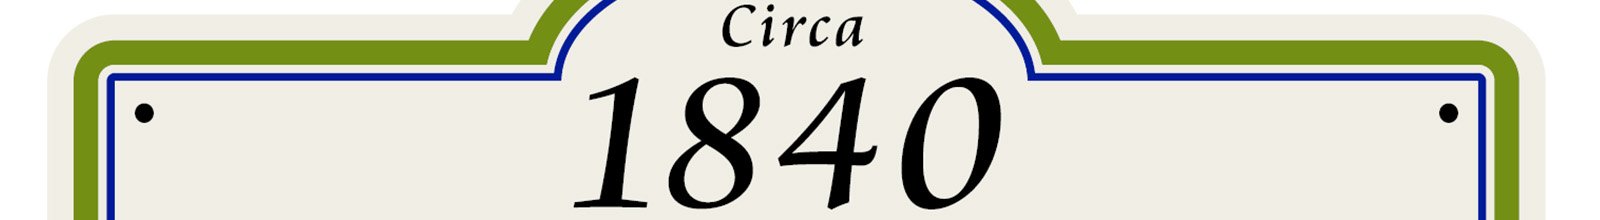 Top part of heritage plaque reading "Circa 1840"